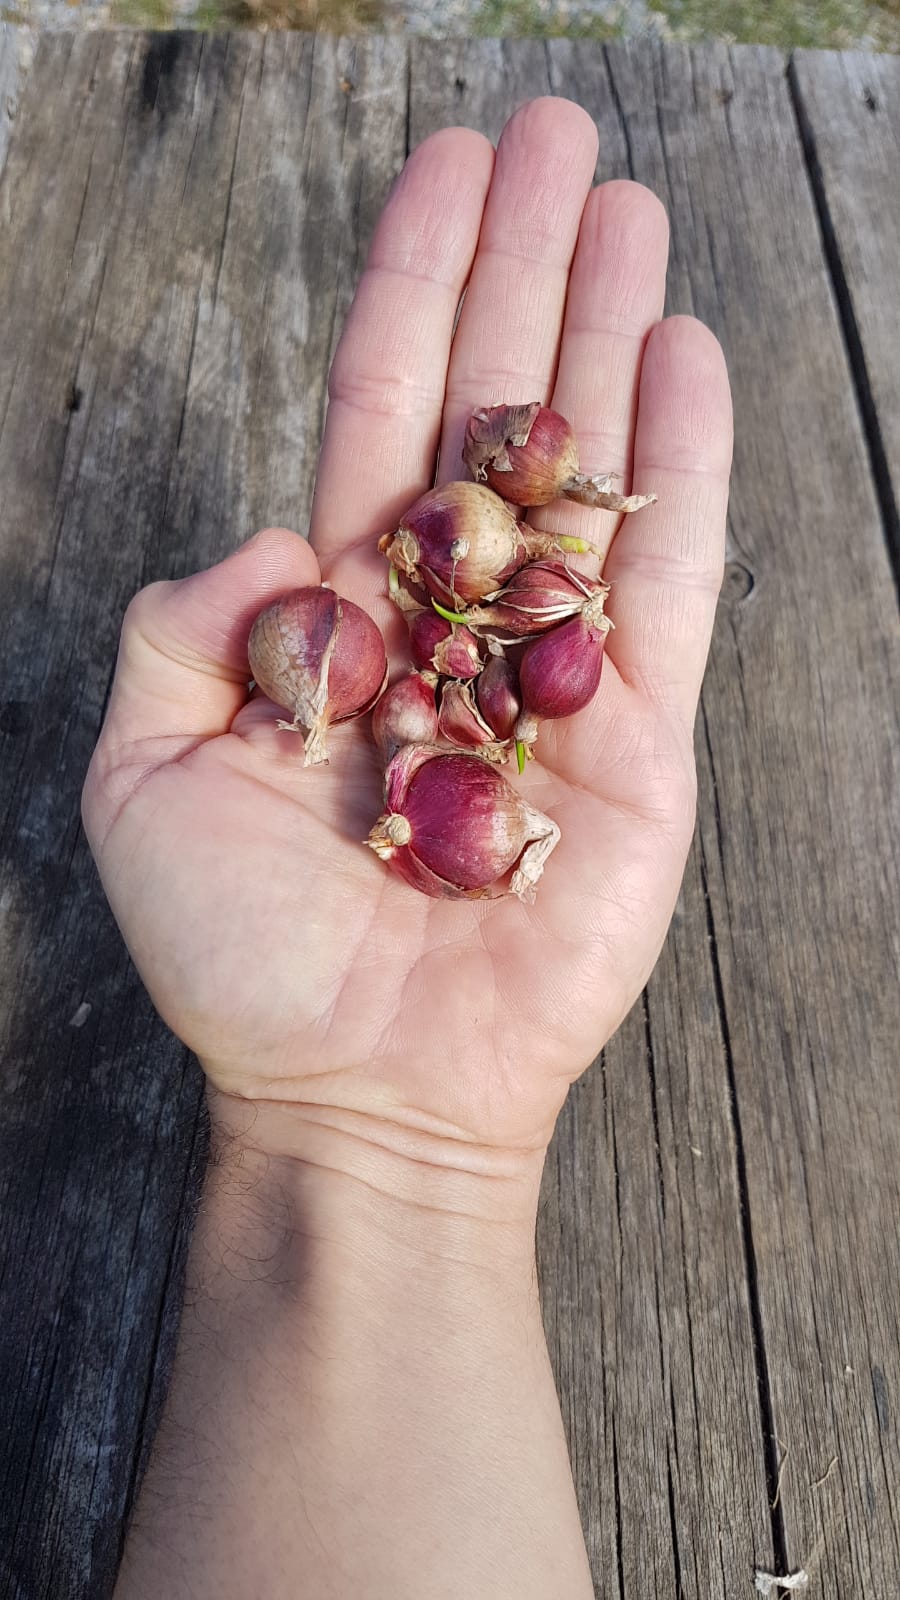 Egyptian Walking Onion, Allium x Proliferum ($5 for 4 bulbils)